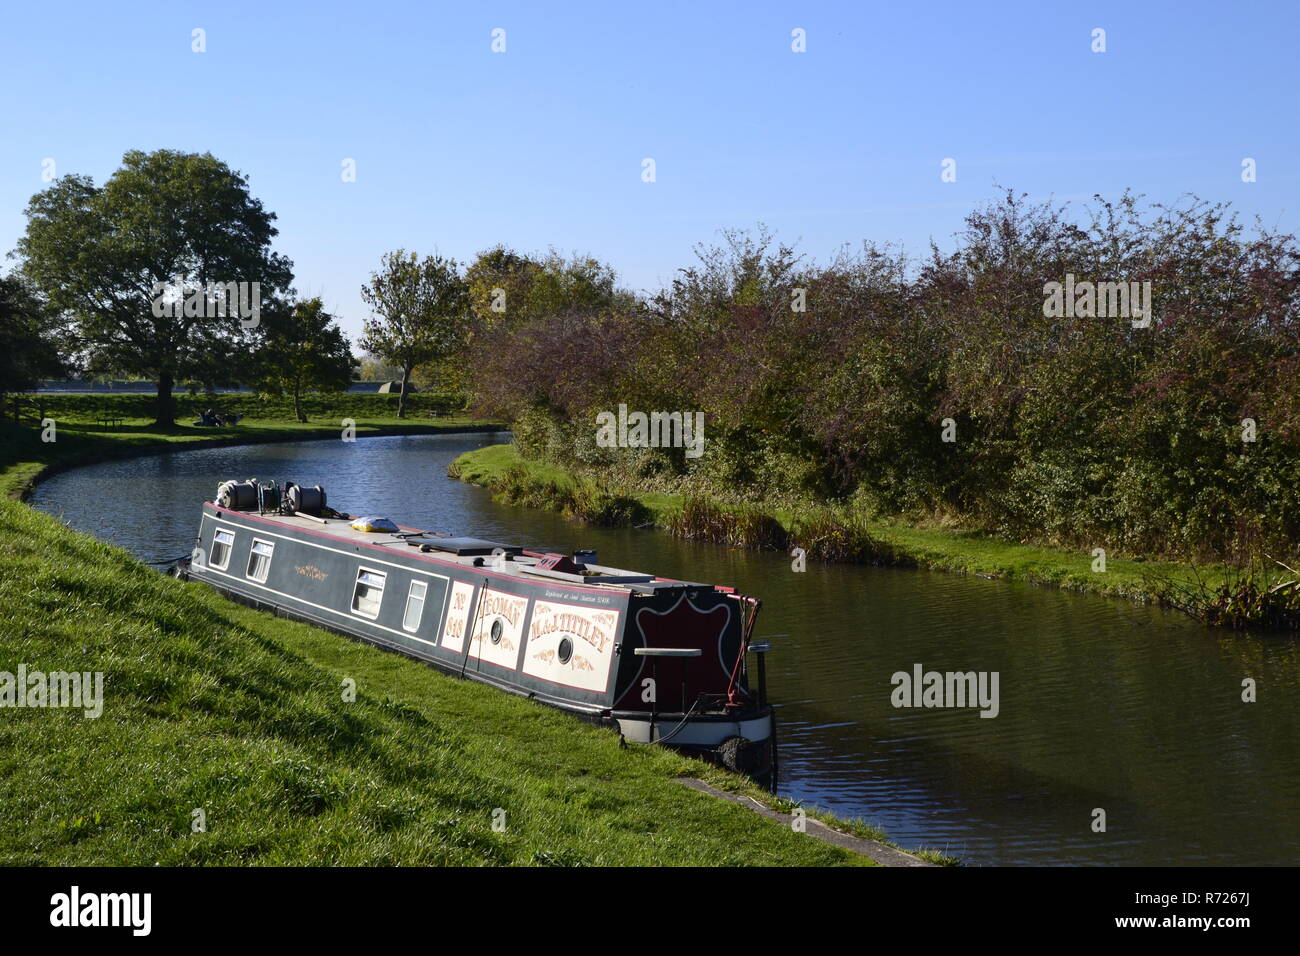 Narrowboat on the Grand Union Canal, Aston Clinton, UK Stock Photo